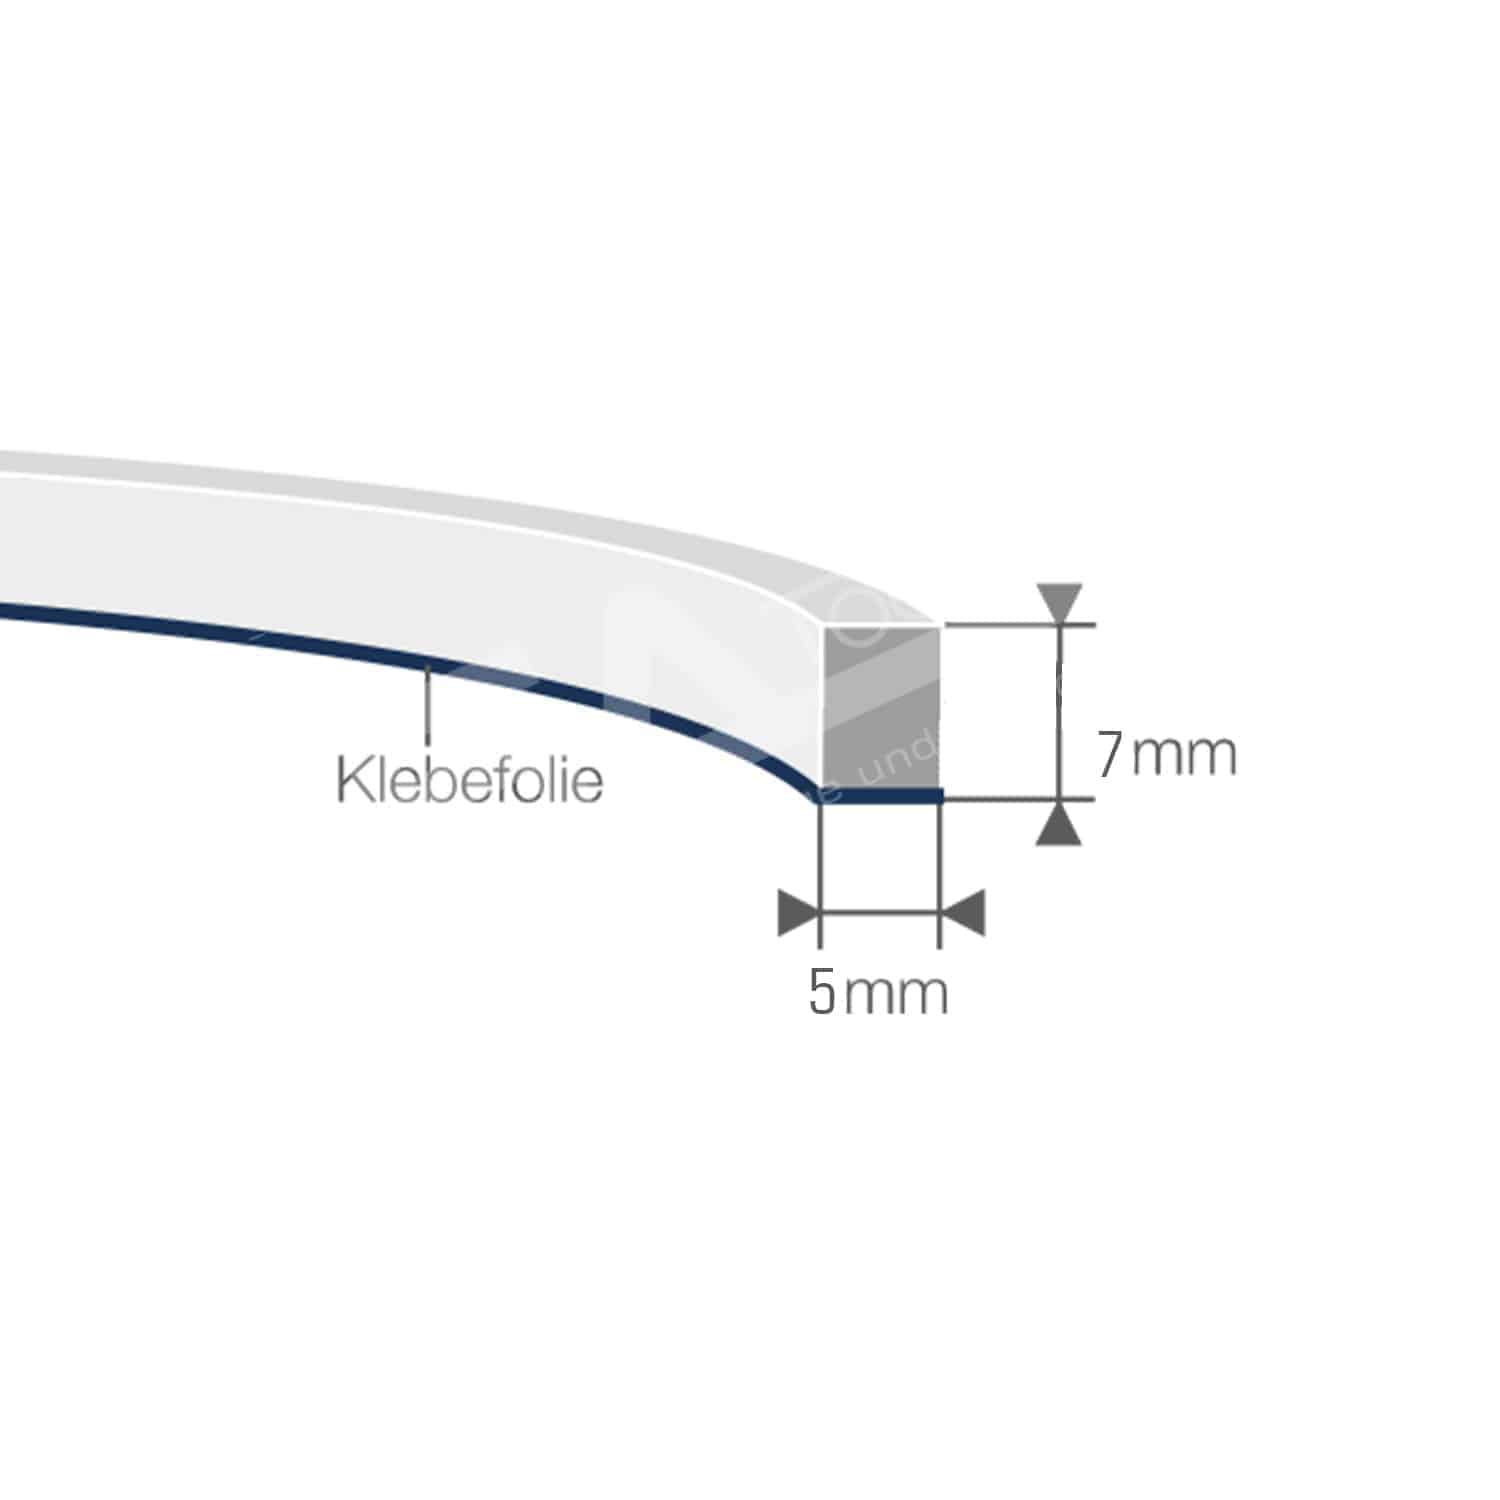 Moosband Schaumstoff-Profil 5x7 mm